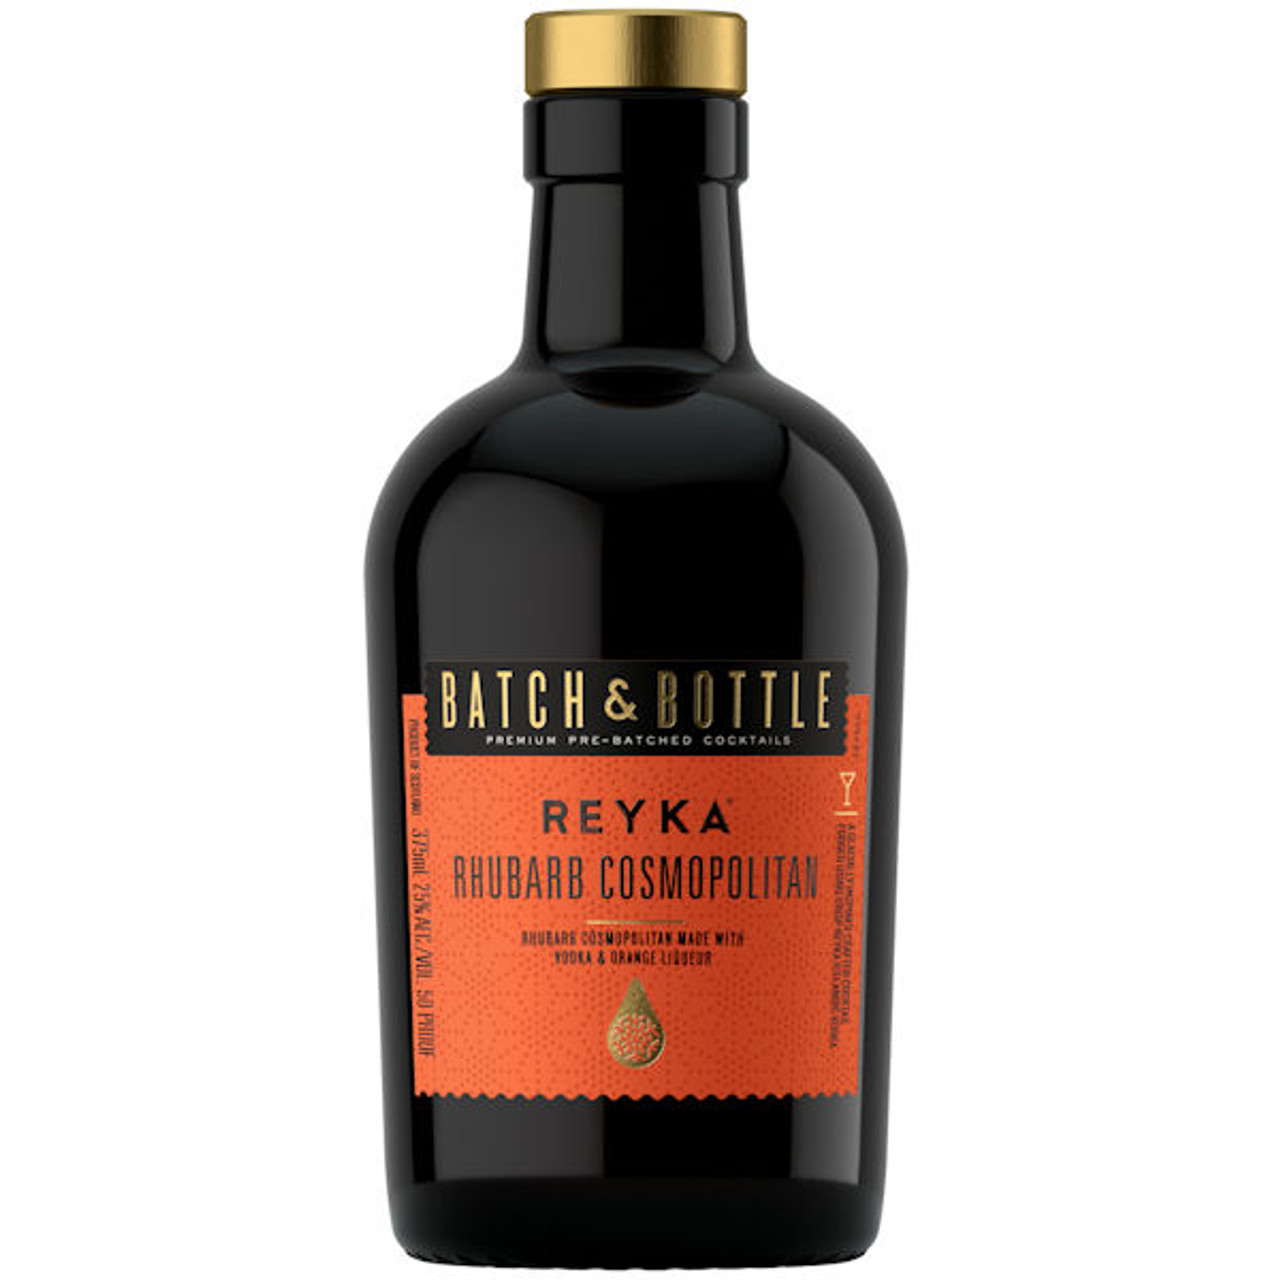 Batch & Bottle Reyka Rhubarb Cosmopolitan Ready To Drink Cocktail 375ml